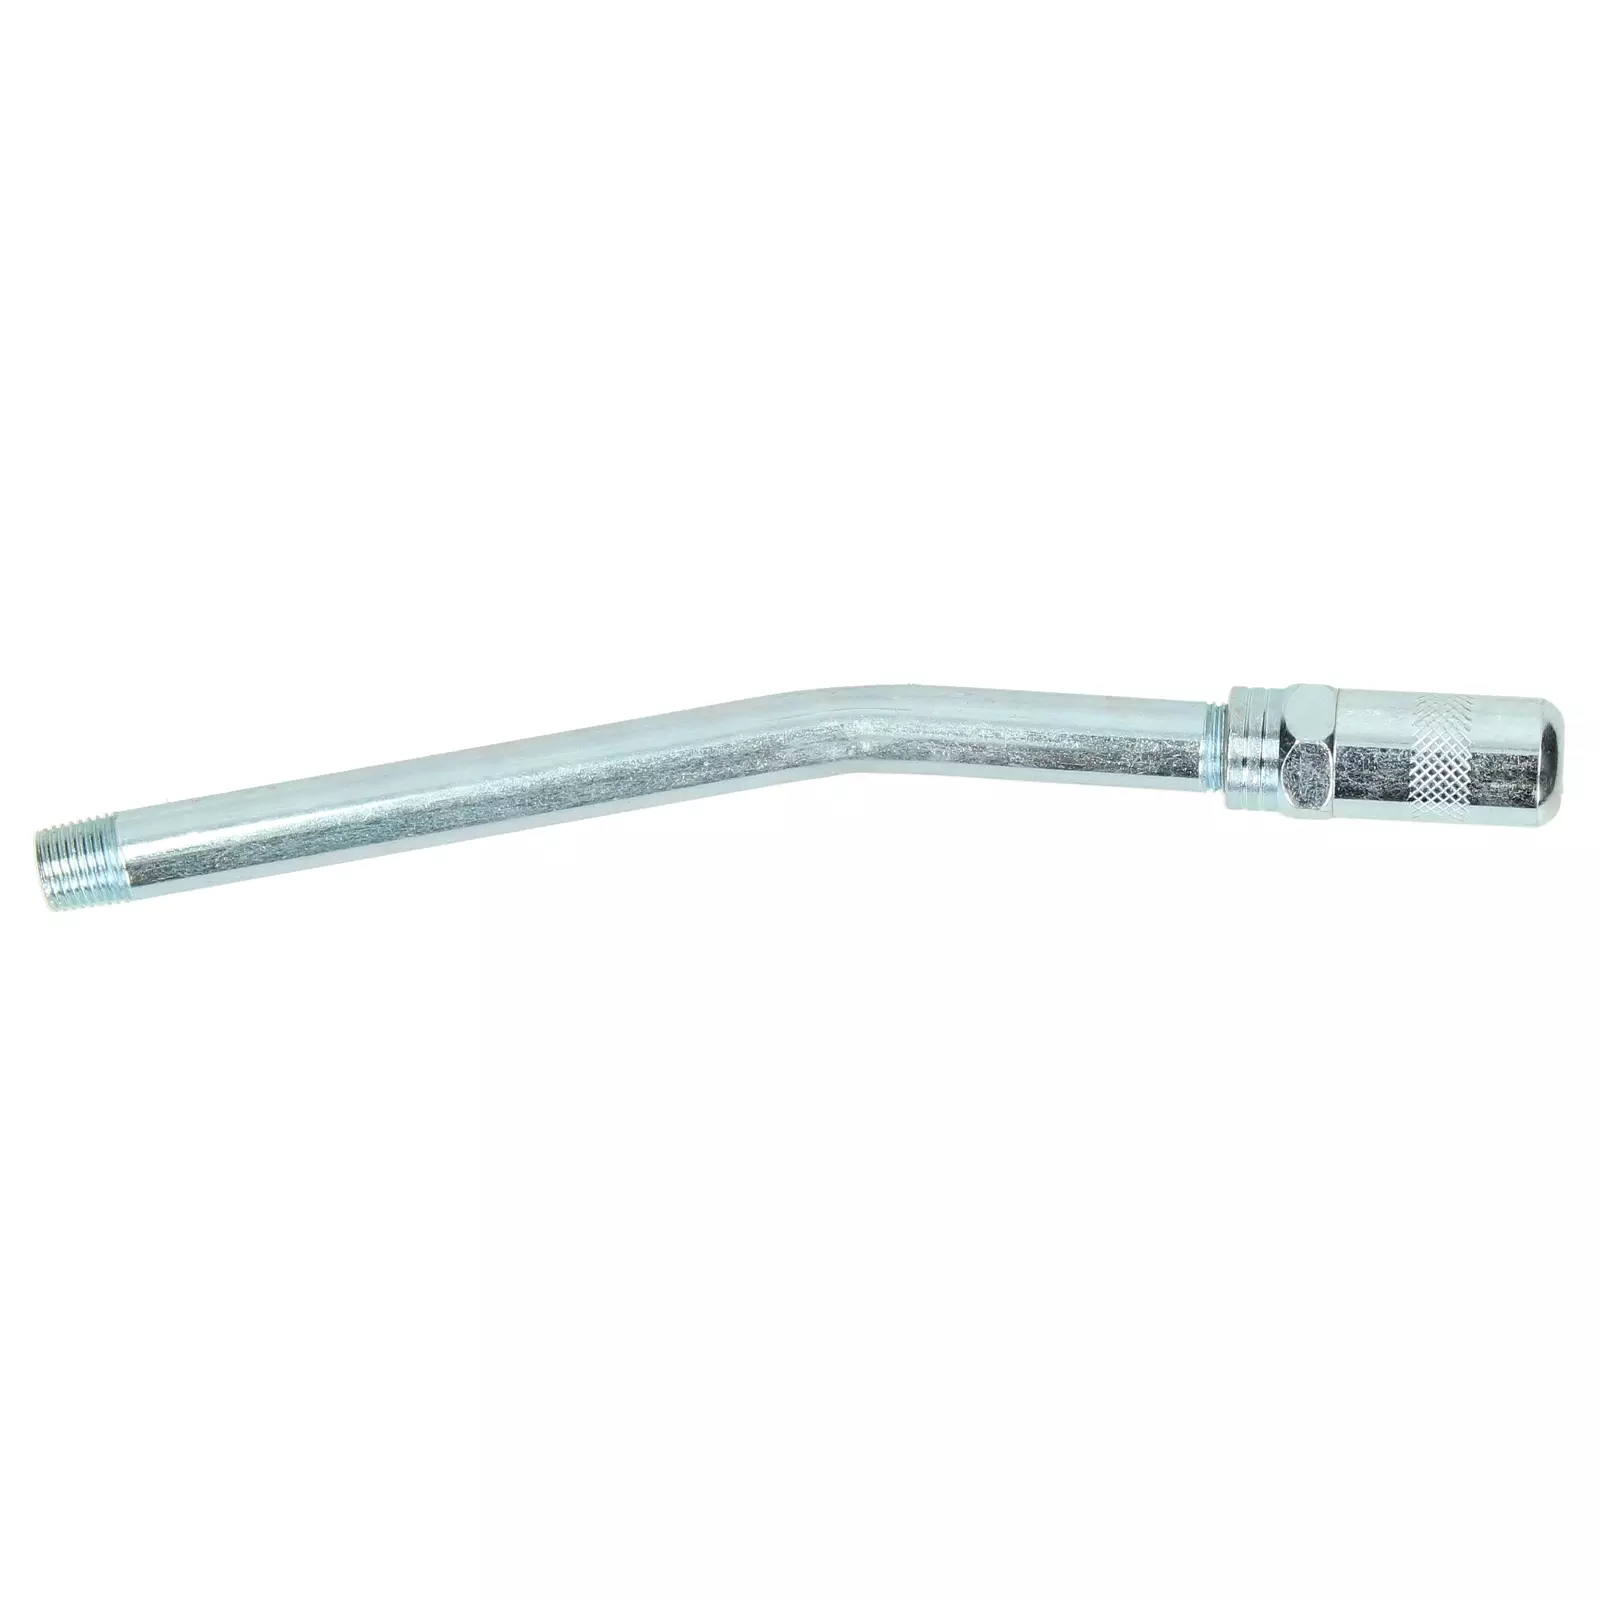 Ручной шприц для смазки YATO 0,4 л (YT-0705)